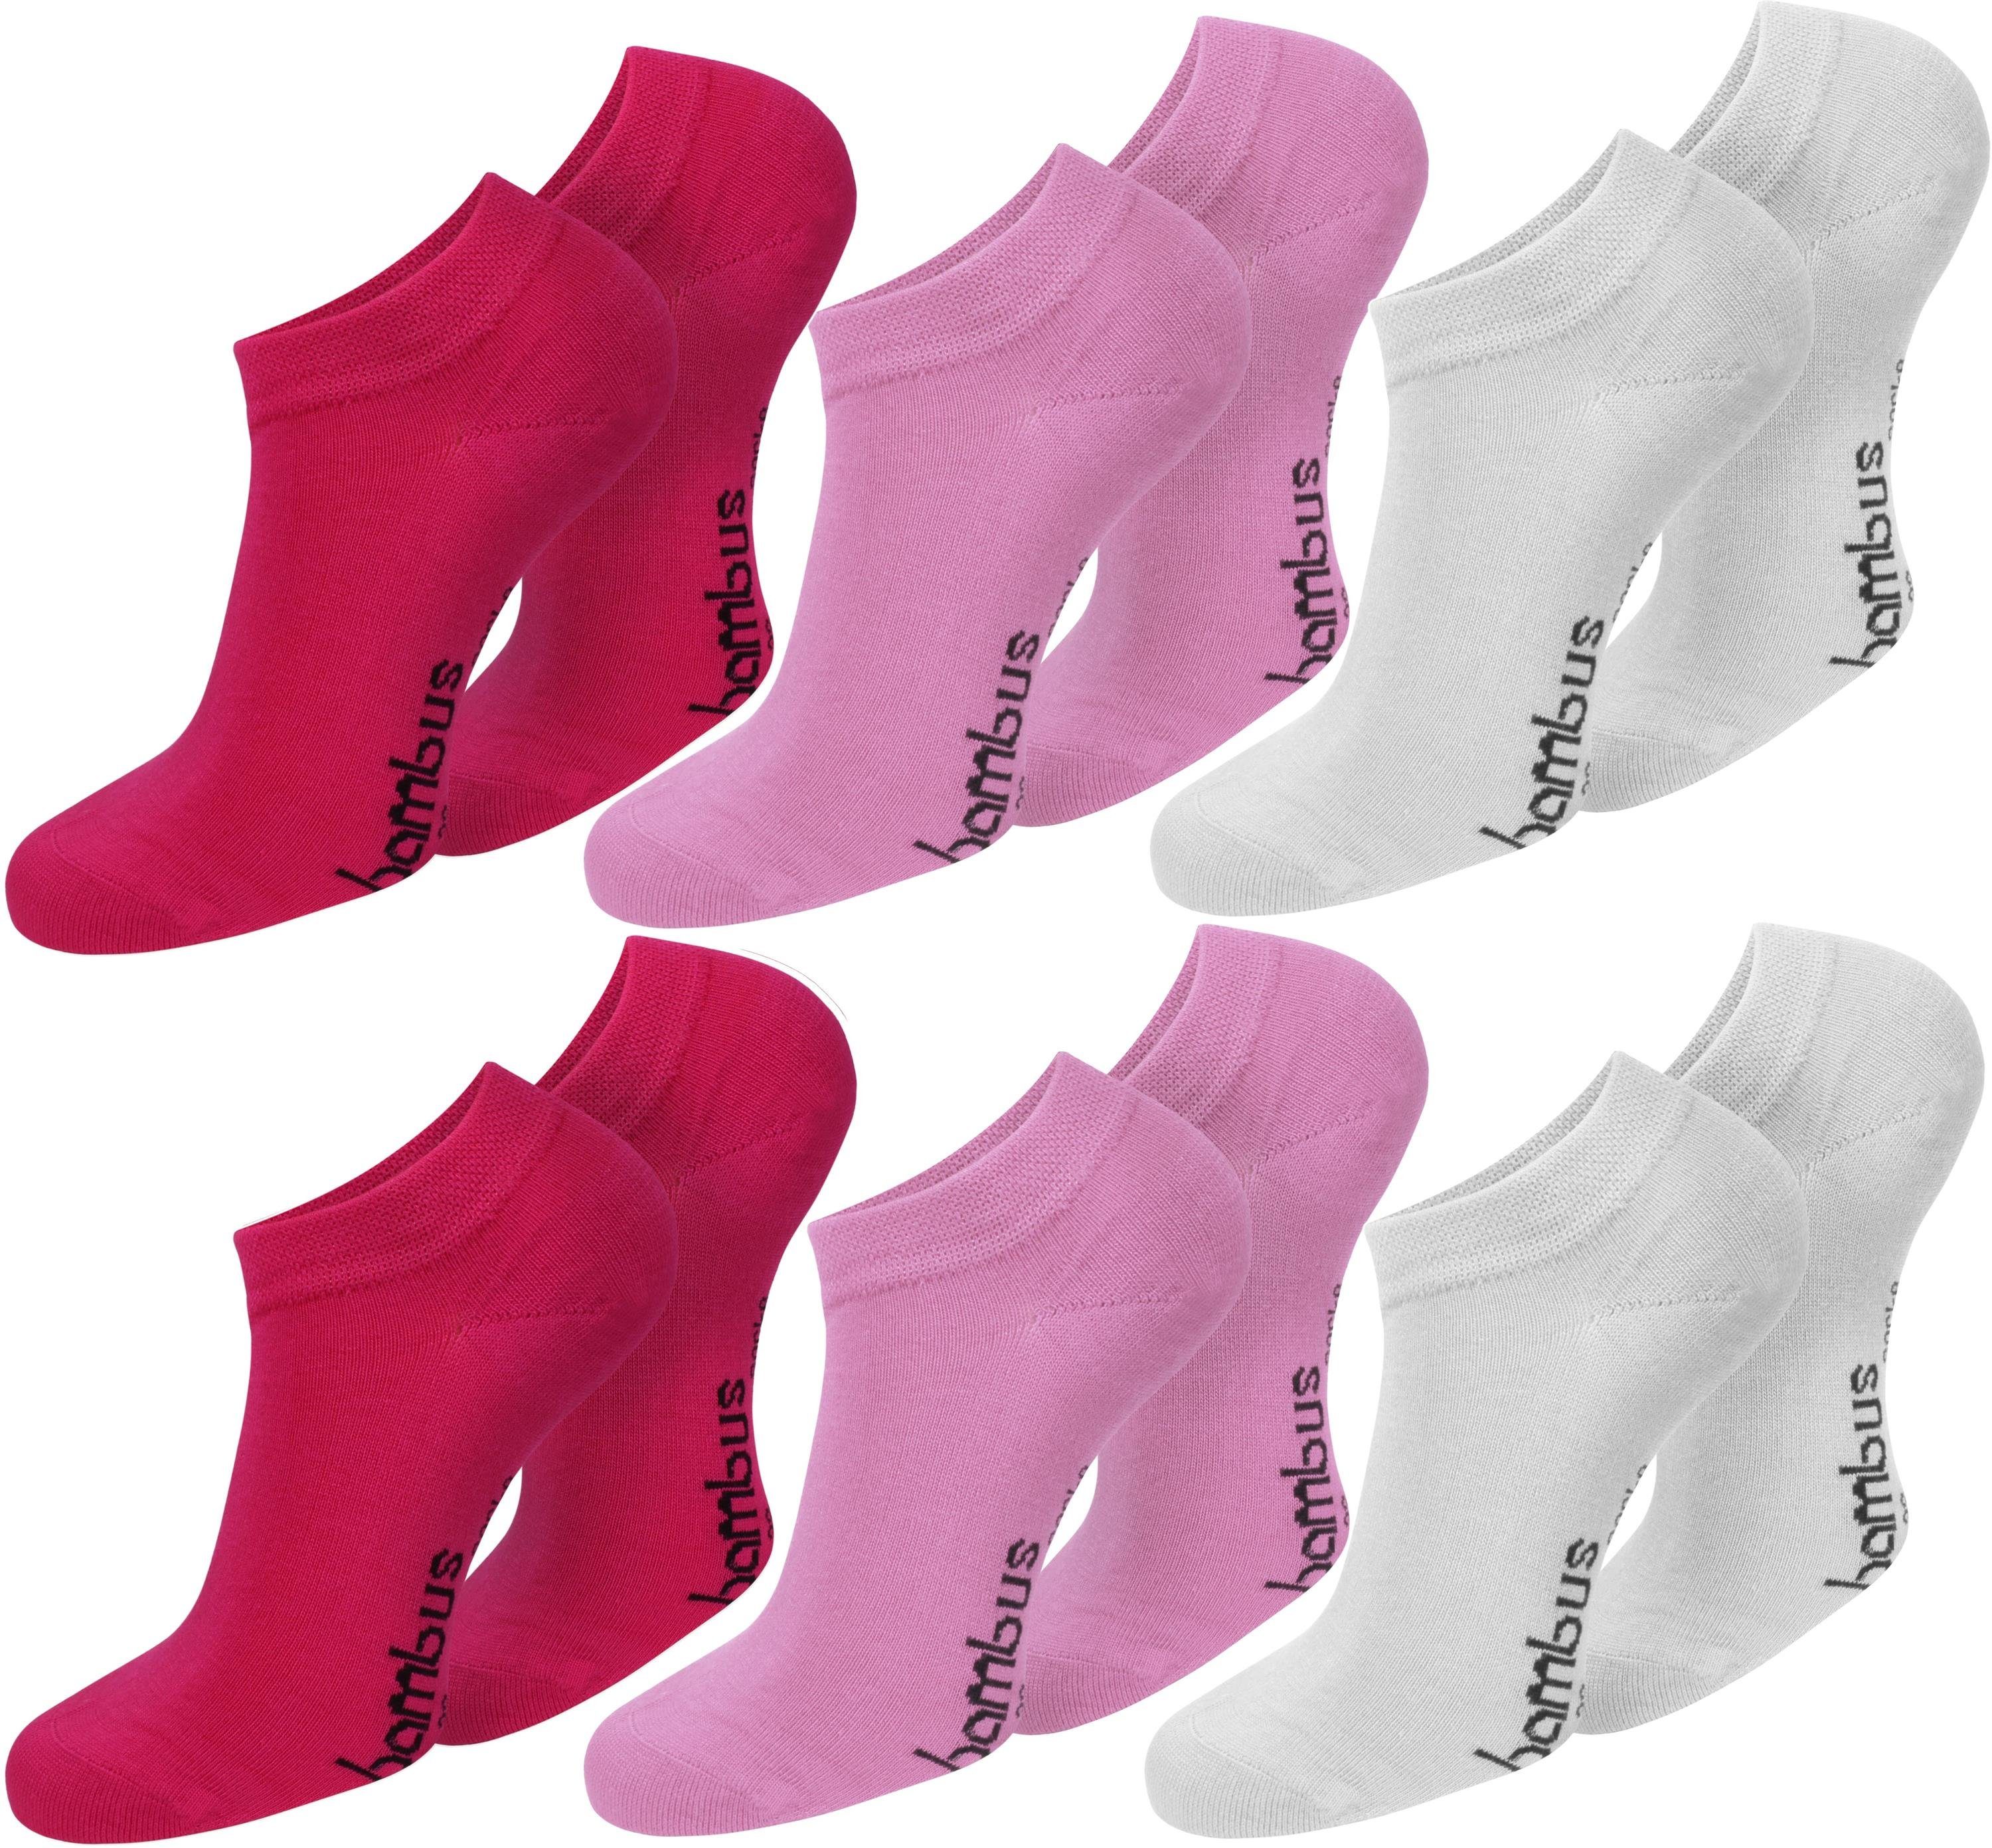 Sneakers Pink/Rosa/Weiß 6 Viskose Bambus-Gesundheitssocken 6 Paar) seidenweich Sneakersocken normani durch Paar (6er-Set,